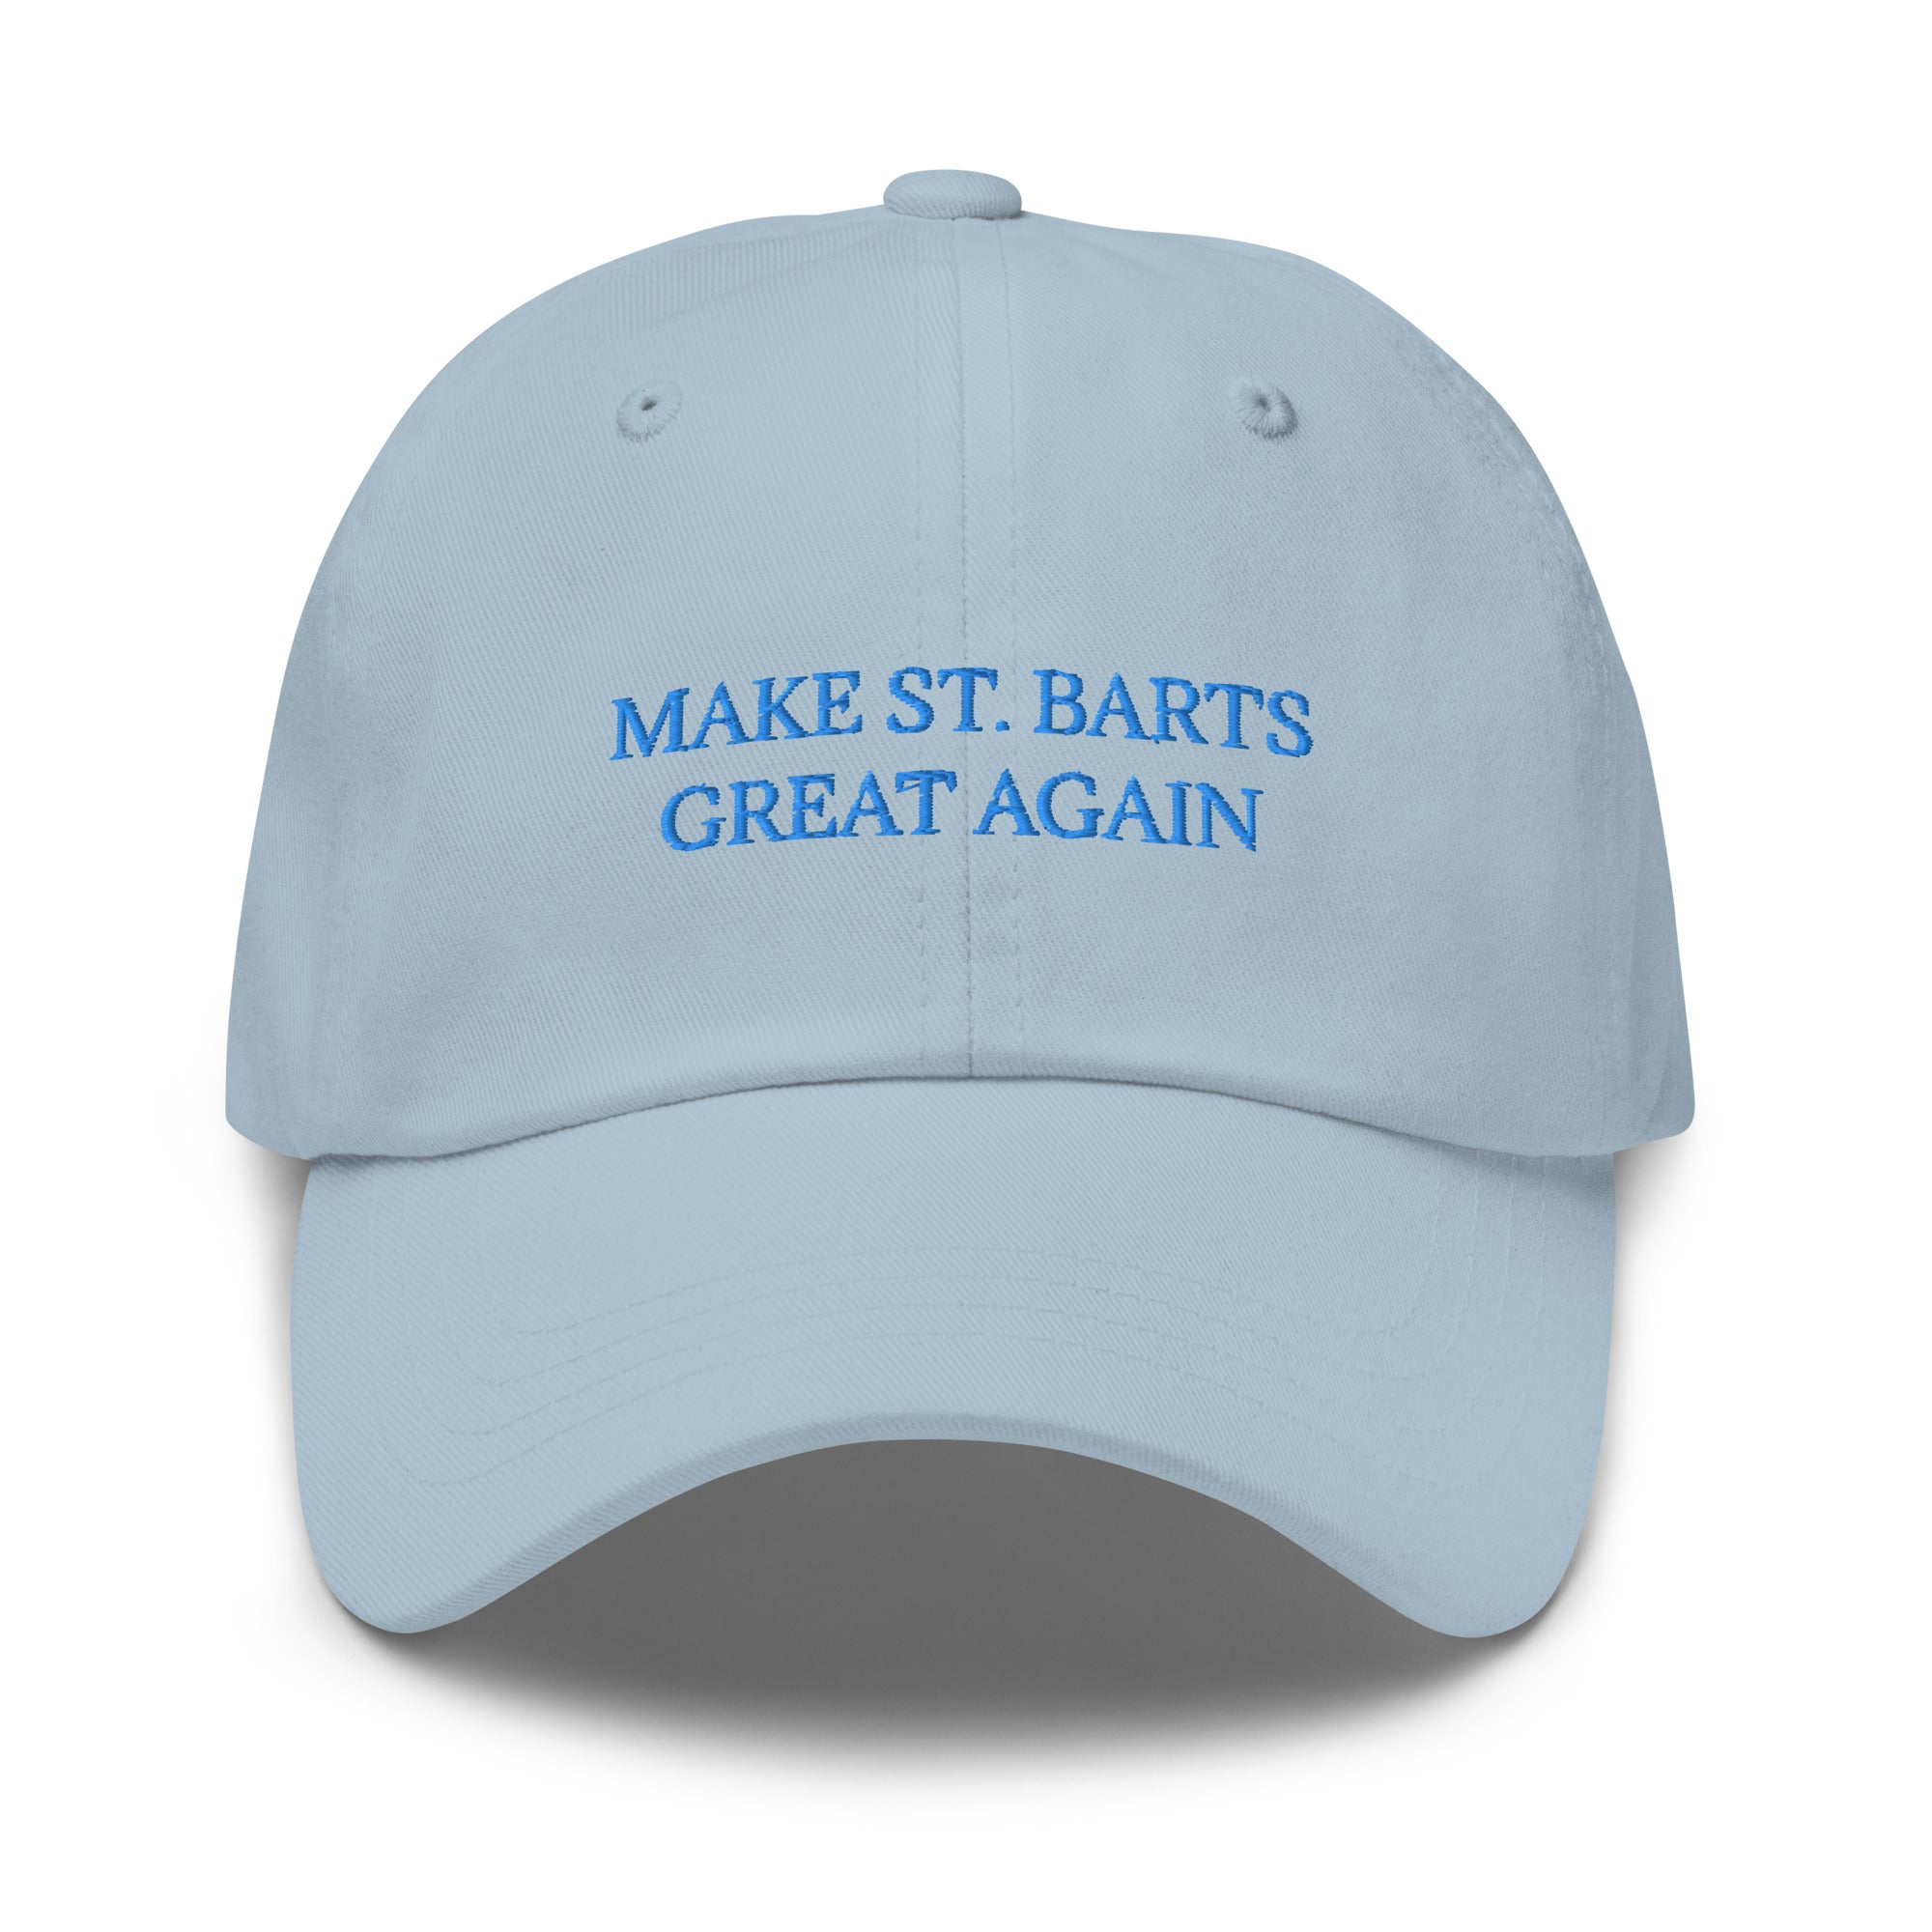 Make st.barts great again - Dad hat